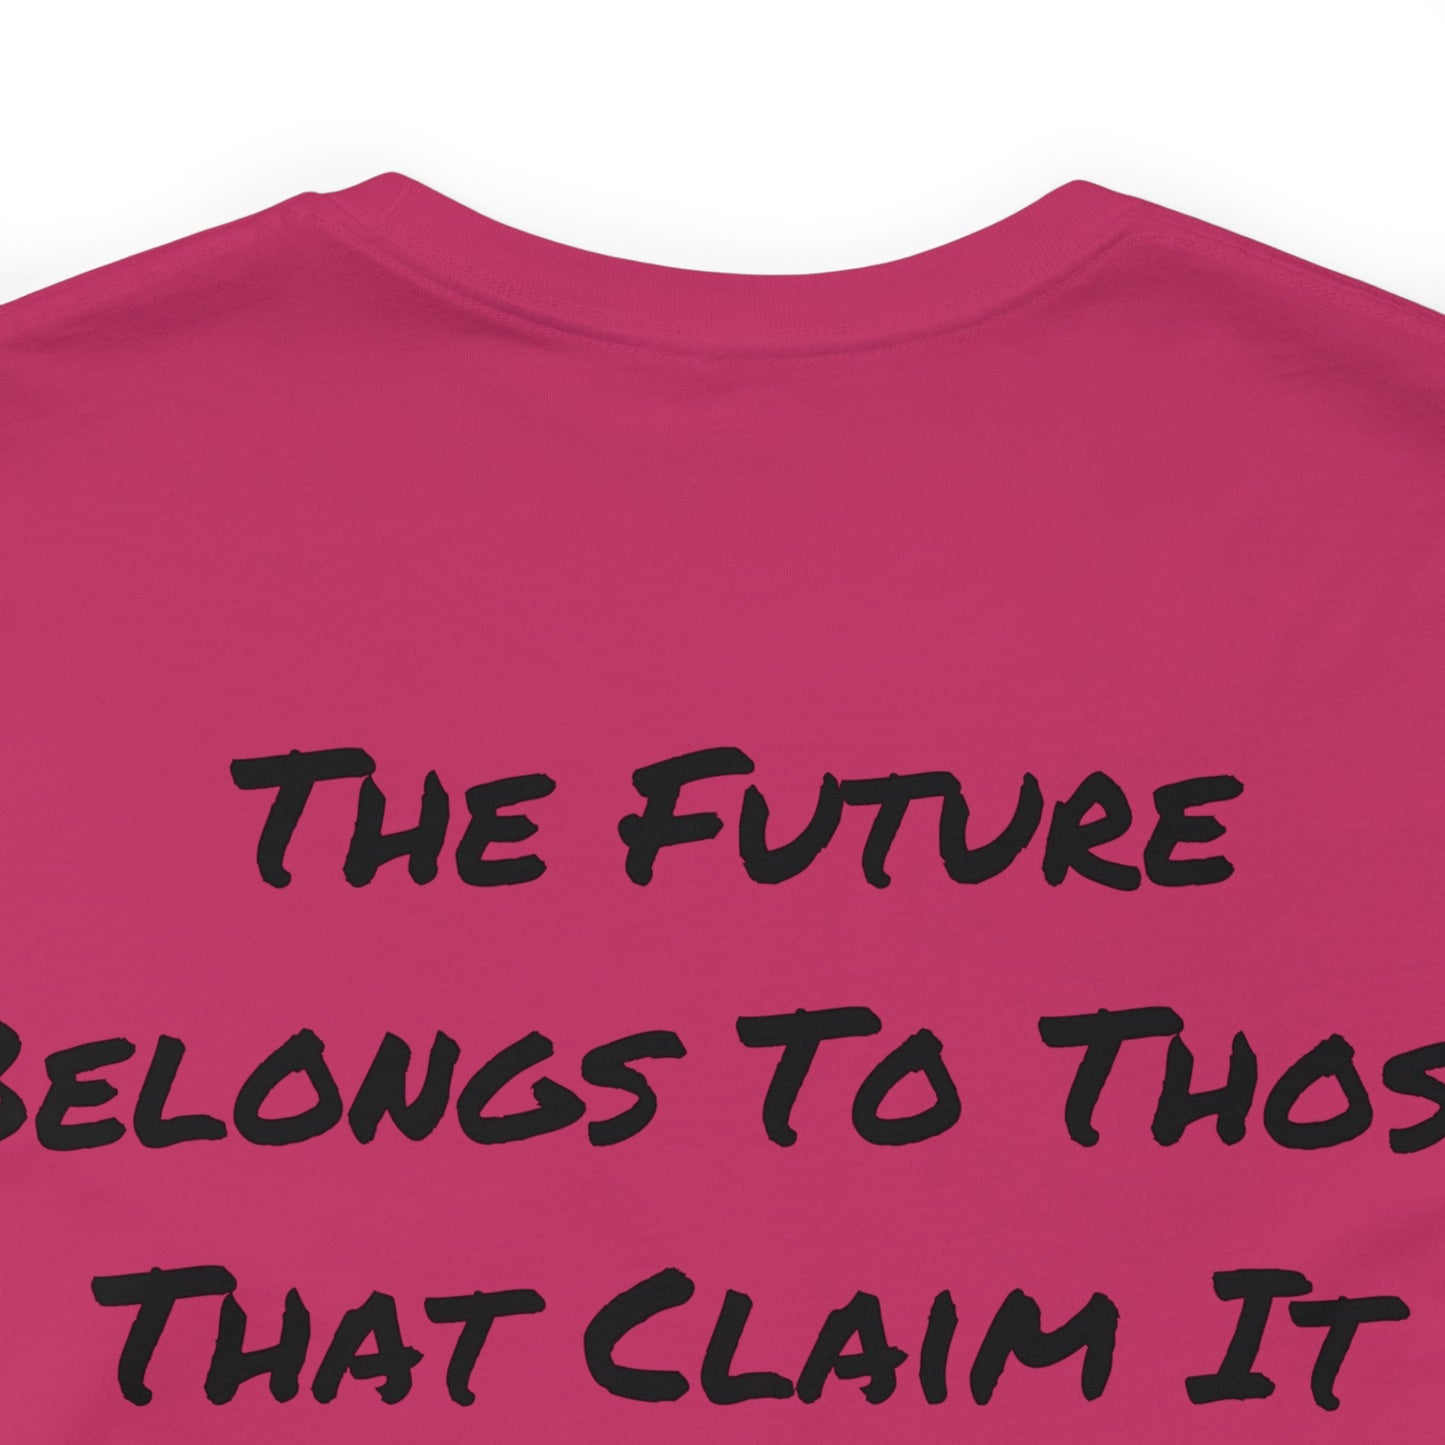 Teevolution Motto | The Future Belongs To Those That Claim It | QR Code | Inspirational Gift | Unisex | Men's | Women's | Tee | T-Shirt